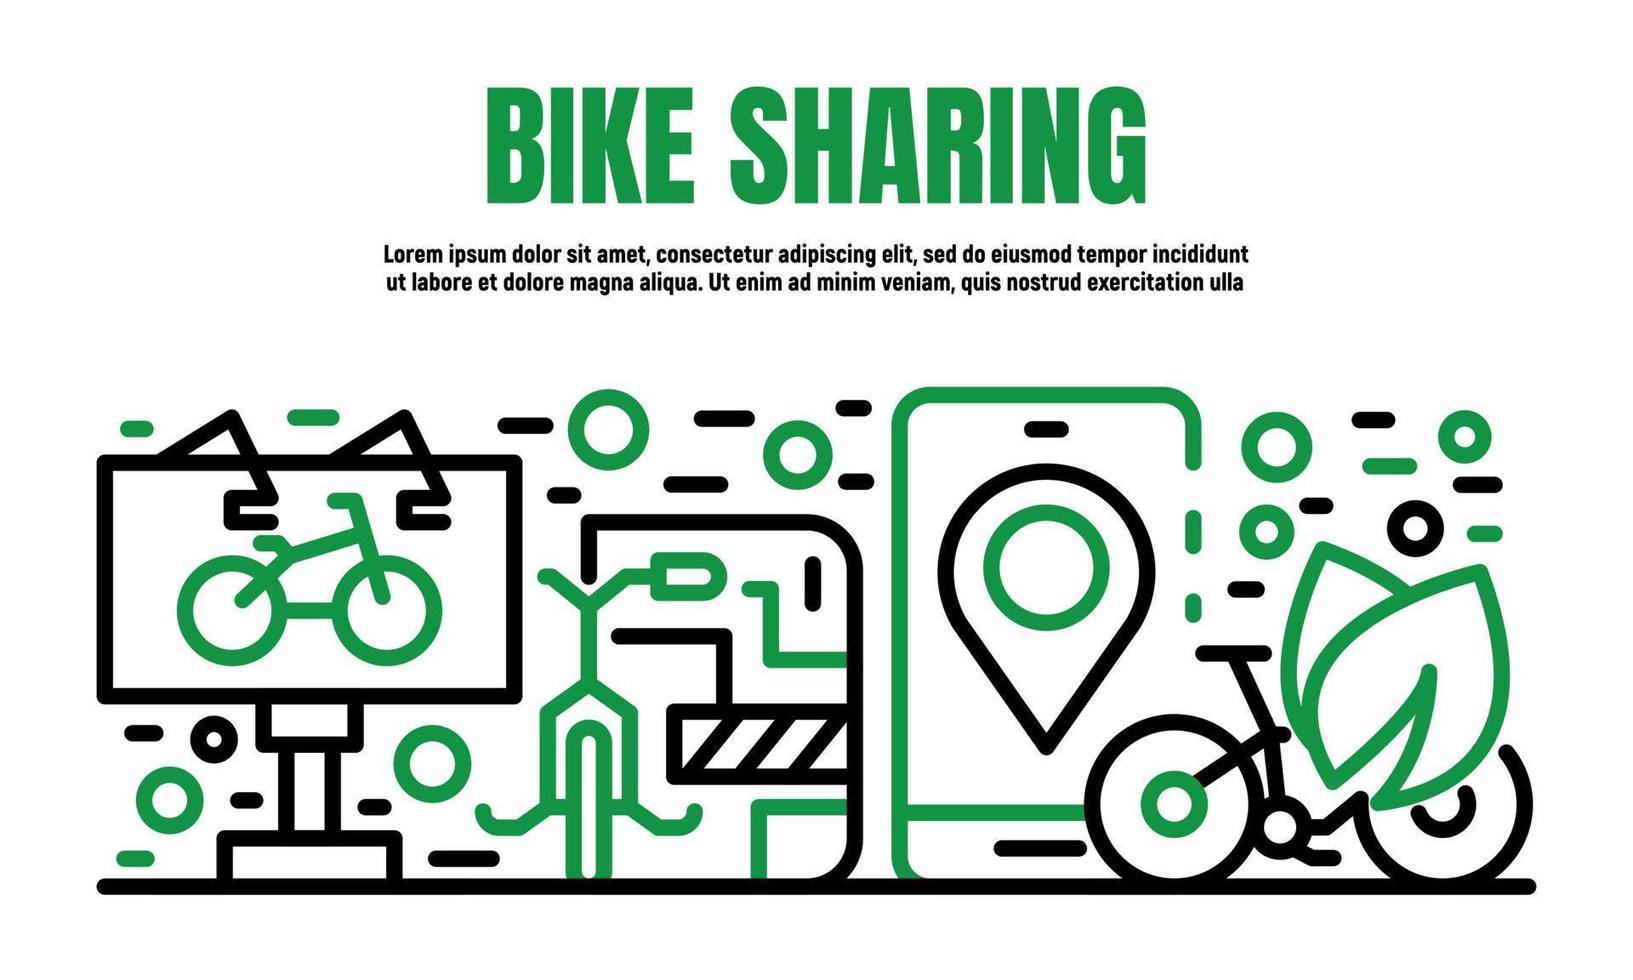 banner para compartir bicicletas, estilo de esquema vector